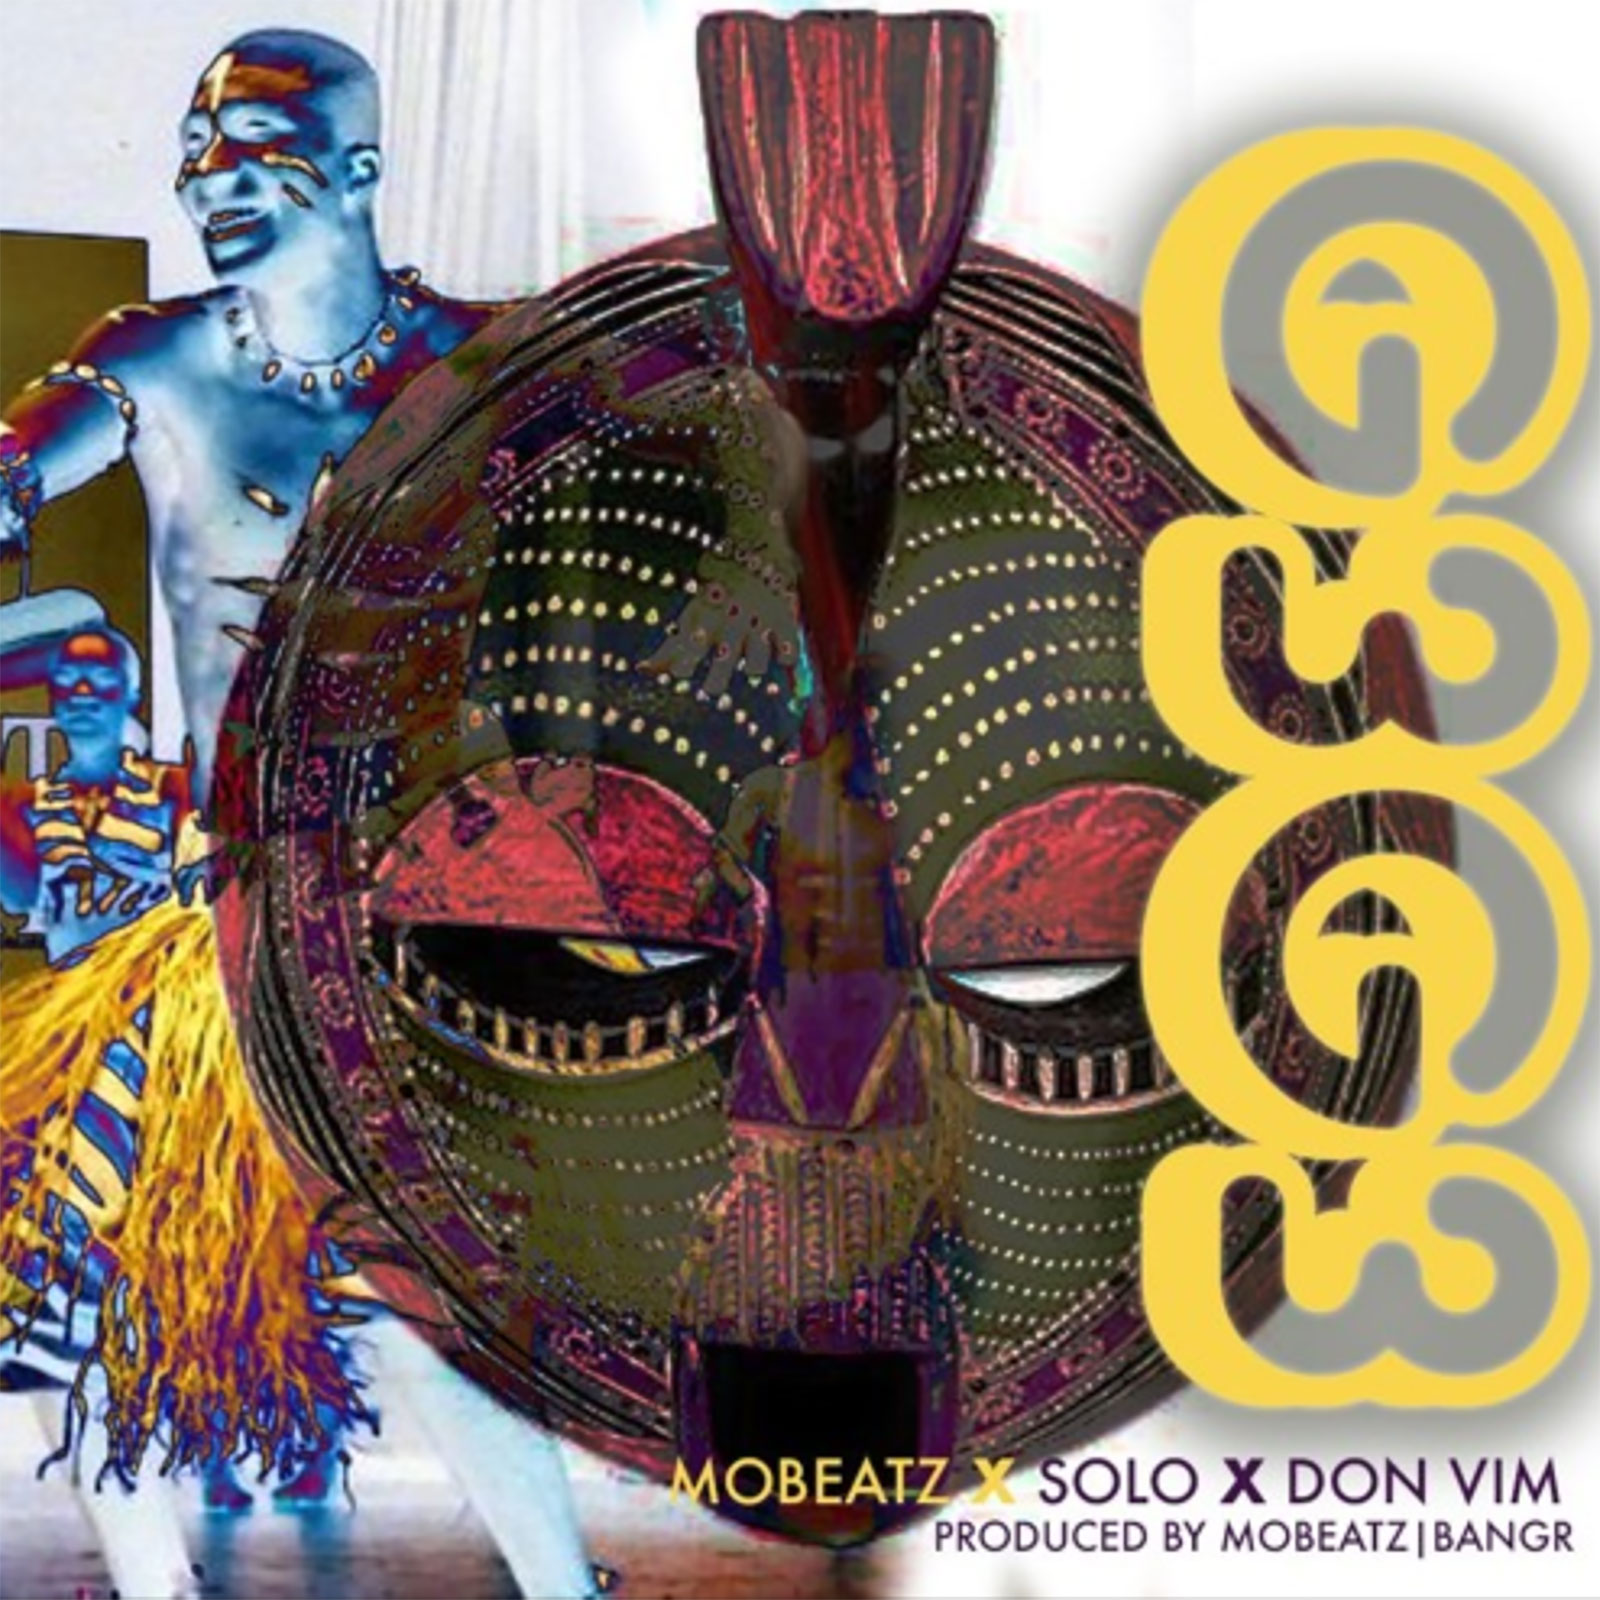 G3g3 by Mobeatz feat. Solo & Don Vim